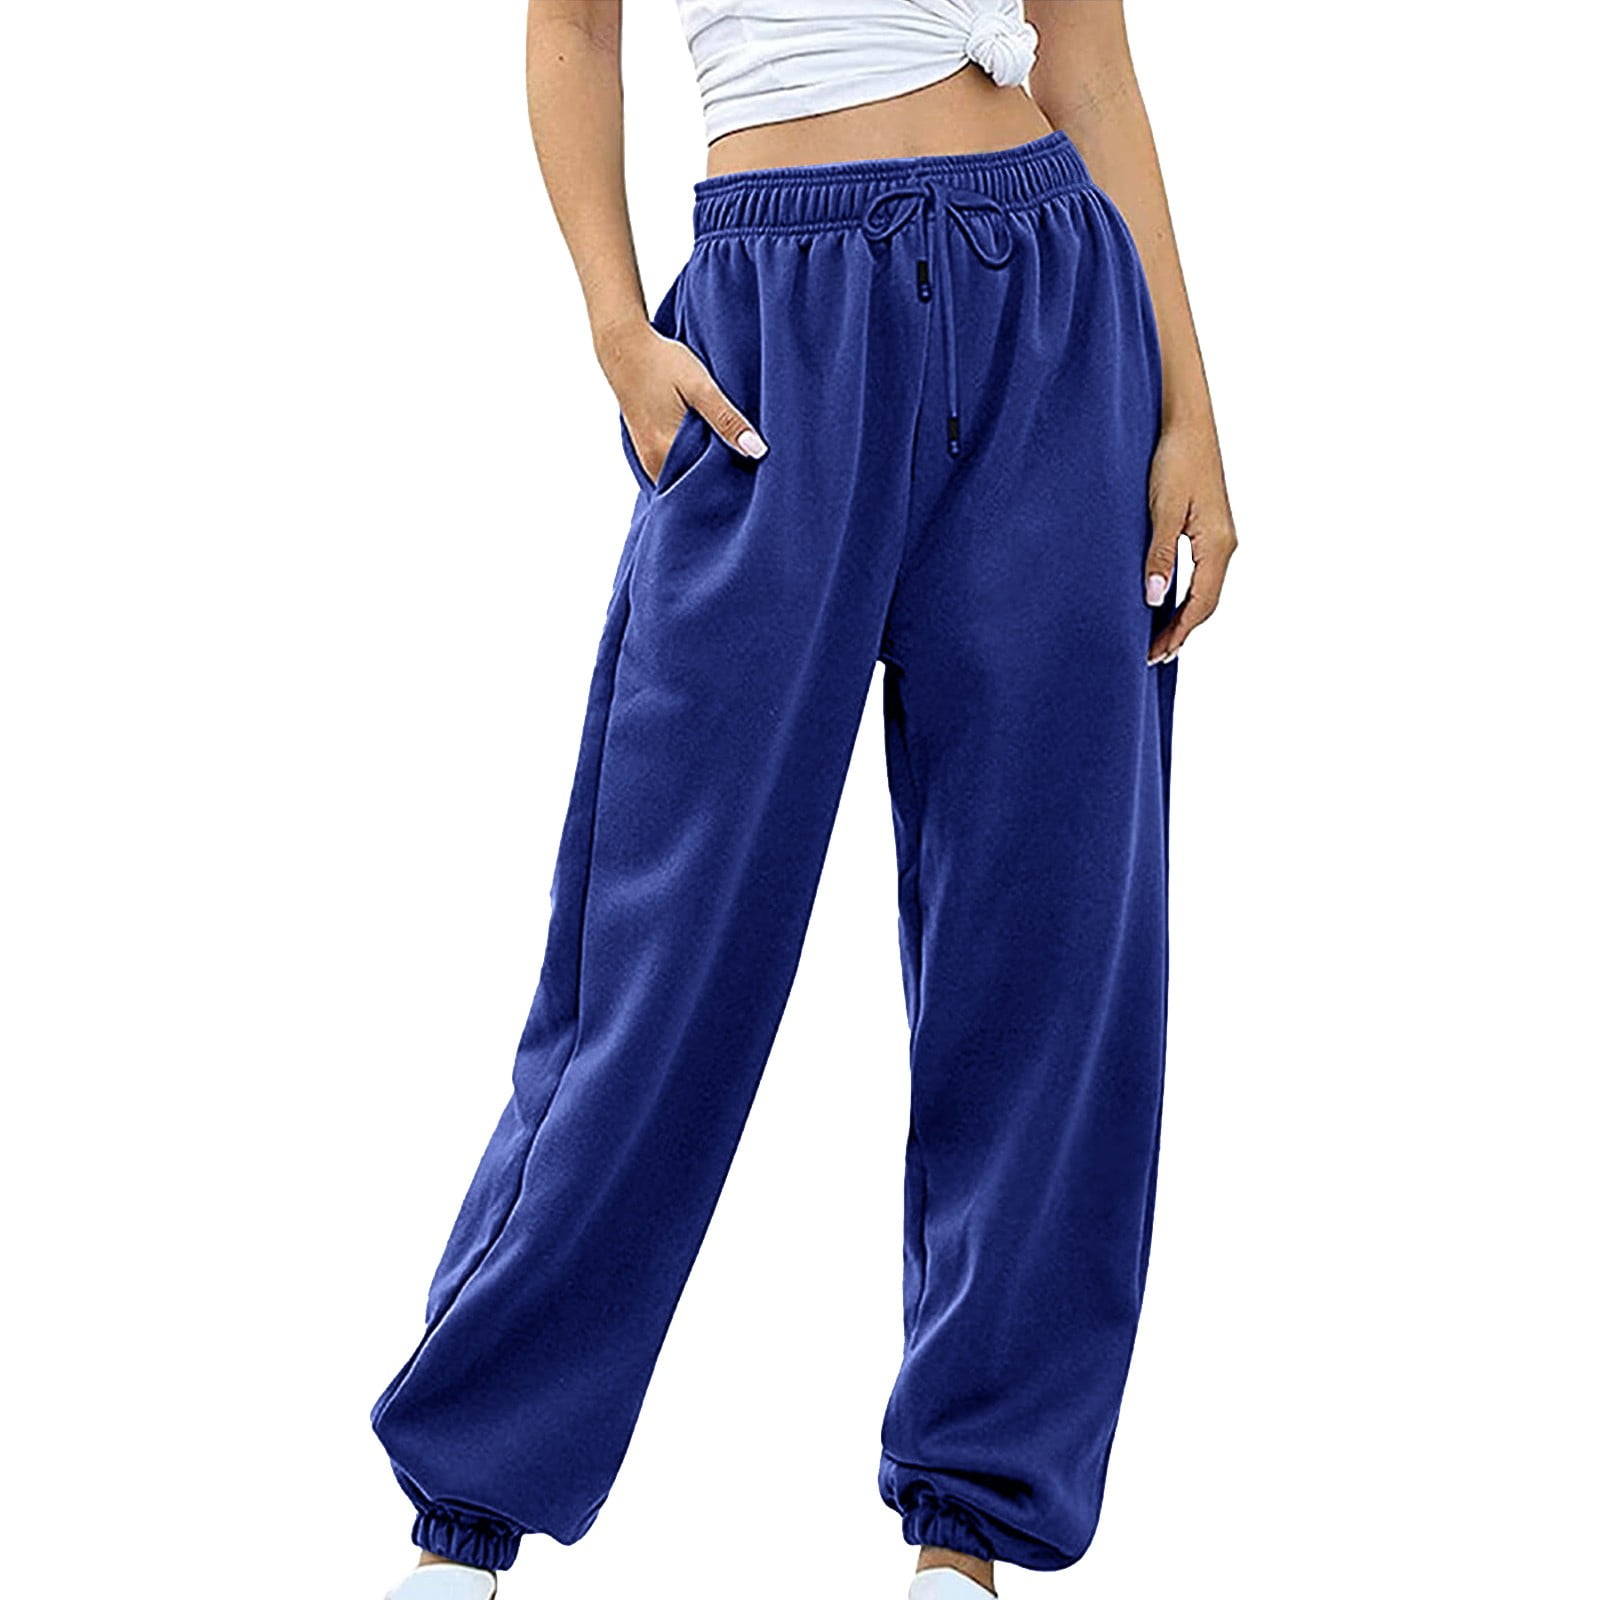 KSODFNXH Casual Sweatpants Unisex Fleece Thick Sweatpants Wit Pockets  Lightweight Drawstring Pants Plain Plus Size Trousers, Blue, Medium :  : Clothing, Shoes & Accessories